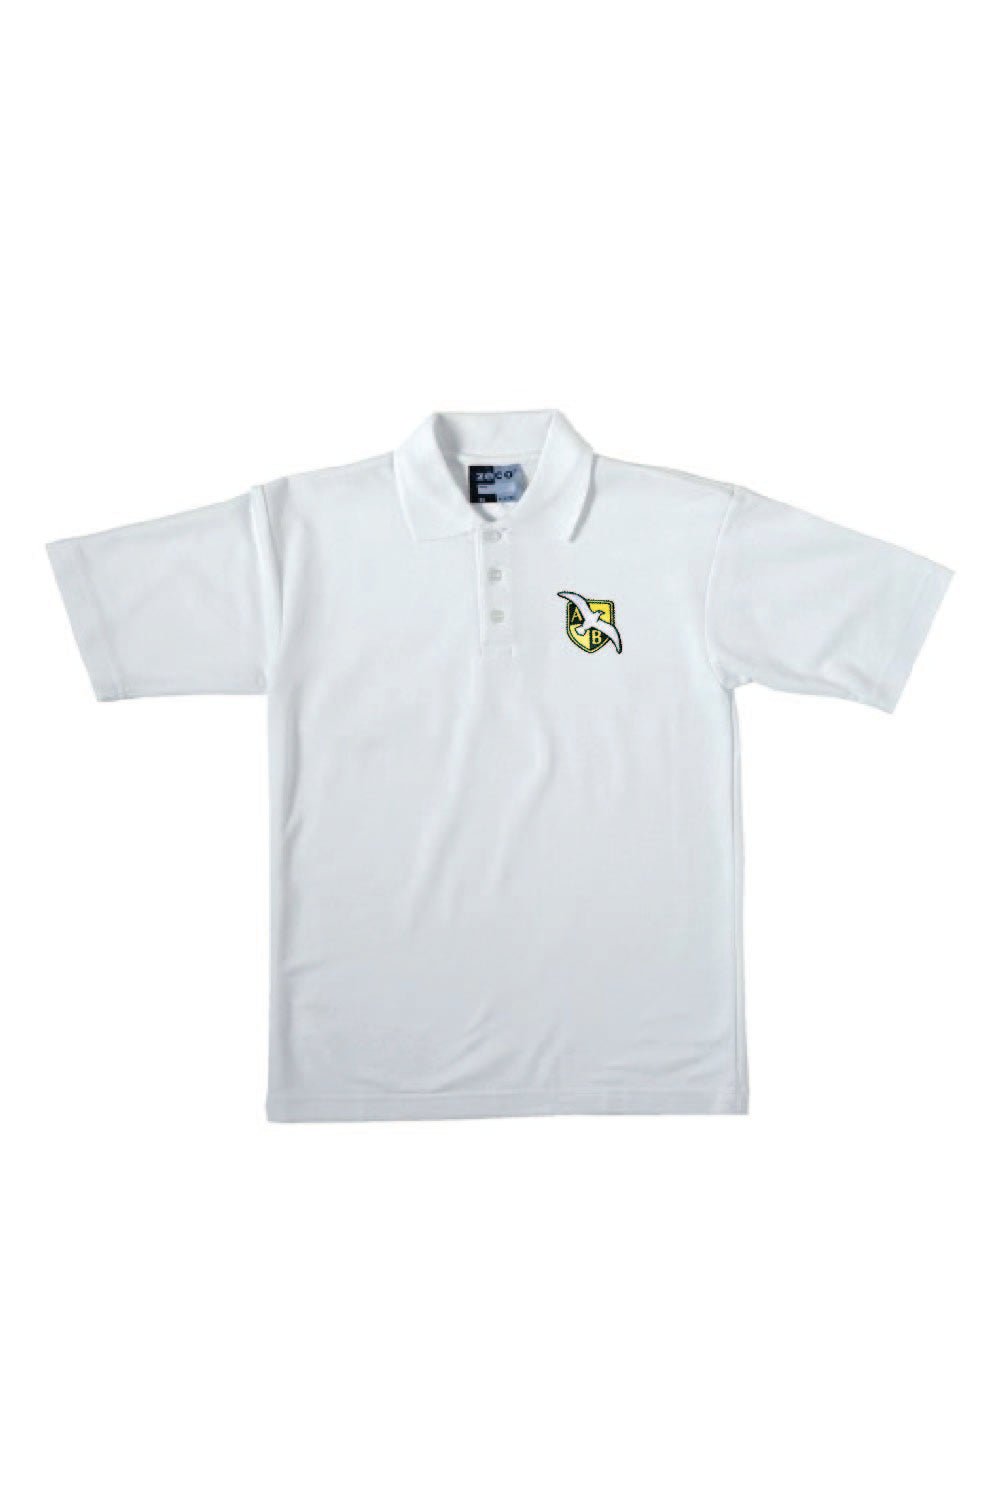 Arthur Bugler White Polo Shirt - Uniformwise Schoolwear